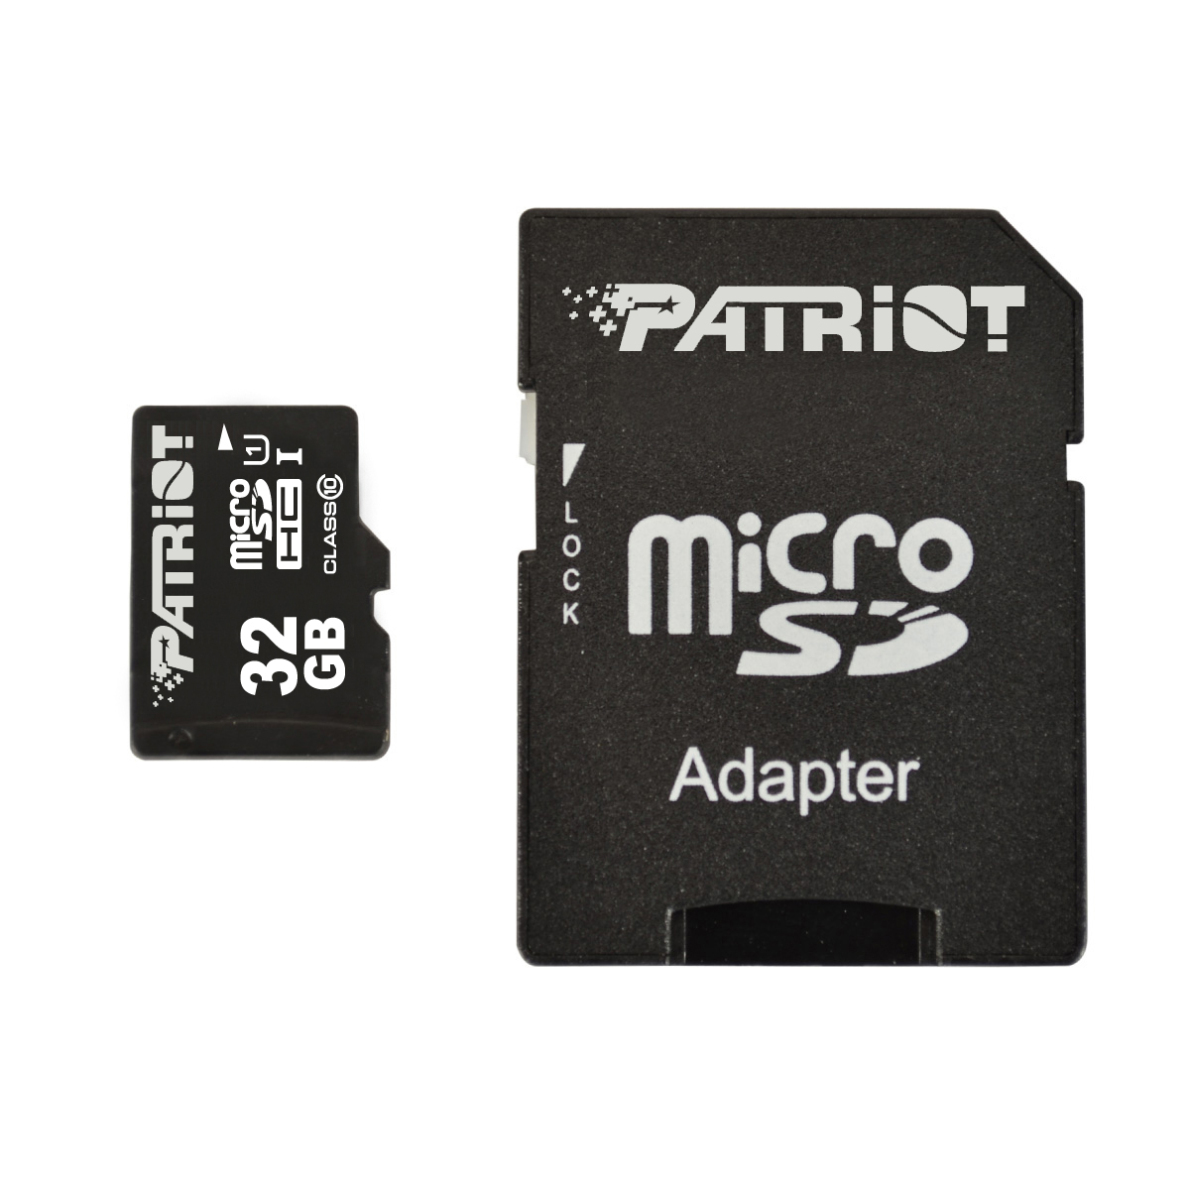 تصویر Patriot LX 32GB Class10 U1 MicroSD Card With Adaptor Patriot LX 32GB Class10 U1 MicroSD Card With Adaptor